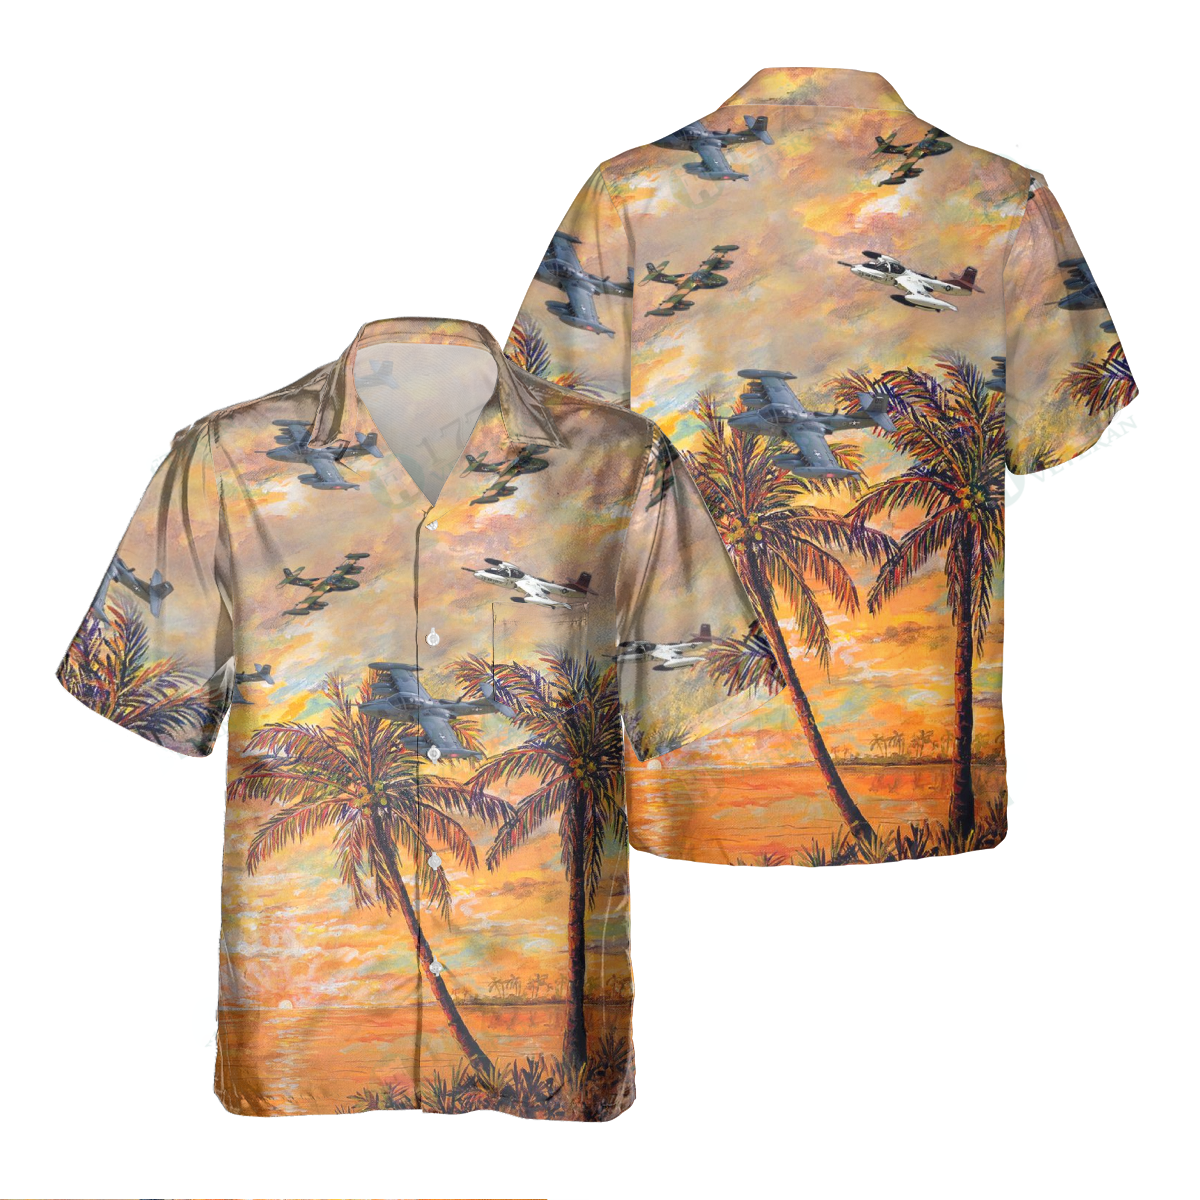 A-37 Dragonfly_Pocket Hawaiian Shirt/ Hawaiian Shirt for Men Dad Veteran/ Patriot Day